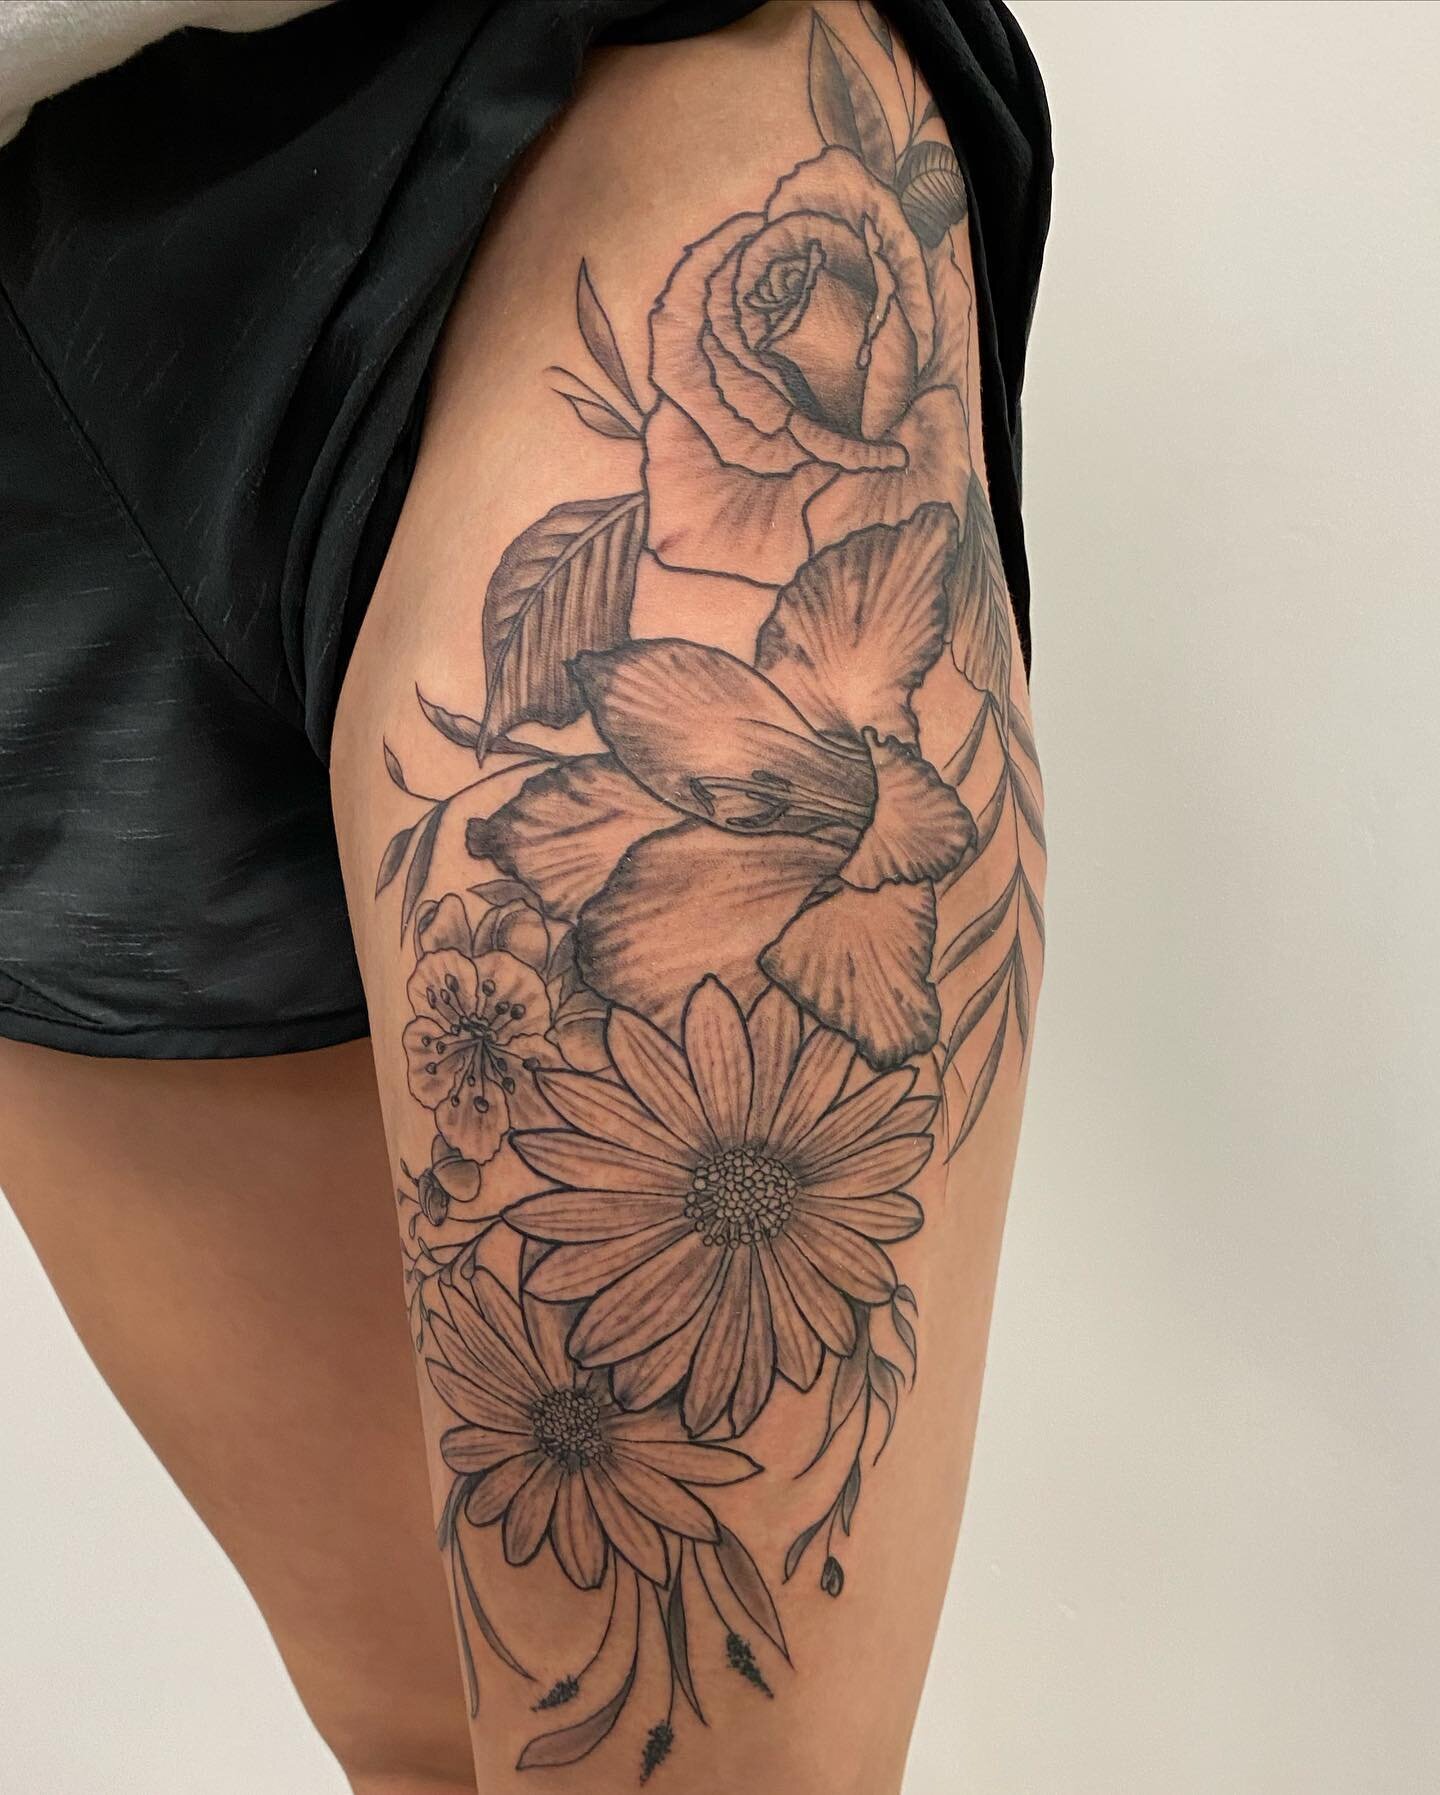 Never give up. Trust your instincts! #theedgetattoo #theedgetattooct #southWindsor #manchesterct #flowertattoo #floraltattoo #cttattooartists #tattoos #inkedup #drawing #tatoo #tattooing #tattoo #art #roses #flora #tat #daisy #203&nbsp; #860 #Connect